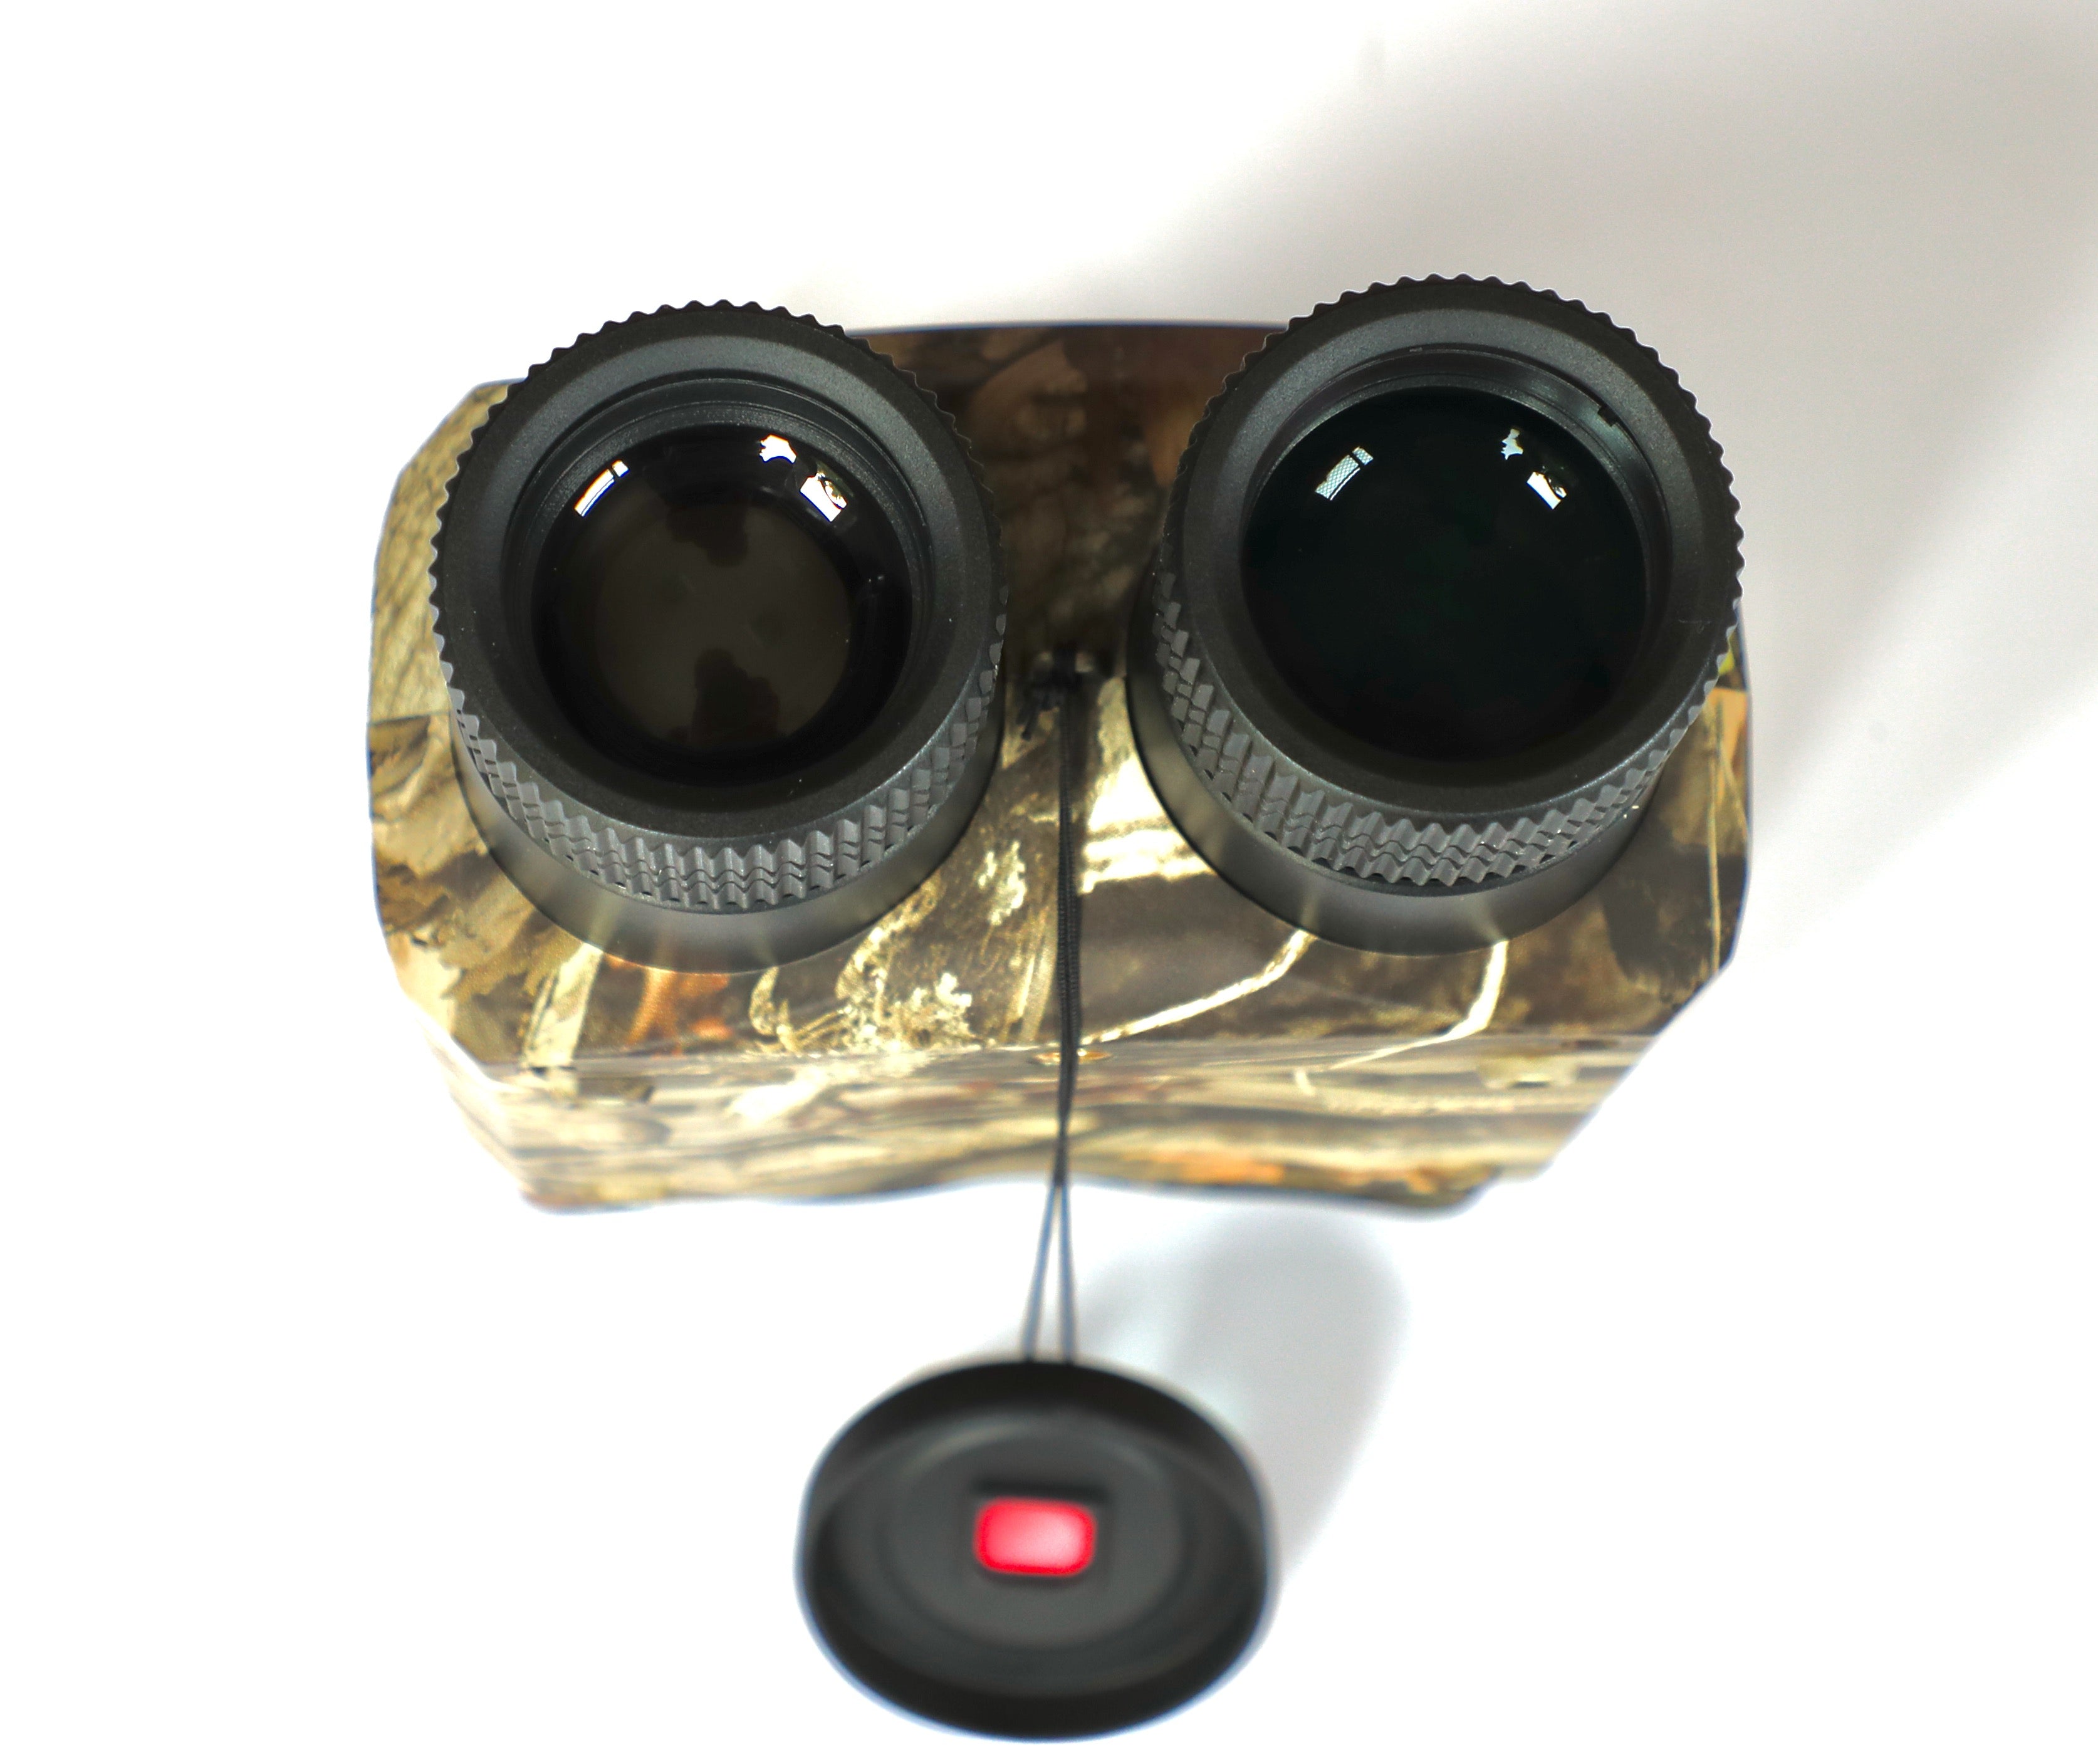 T-eagle NV800 Pro Infrared Digital Night Vision Binocular